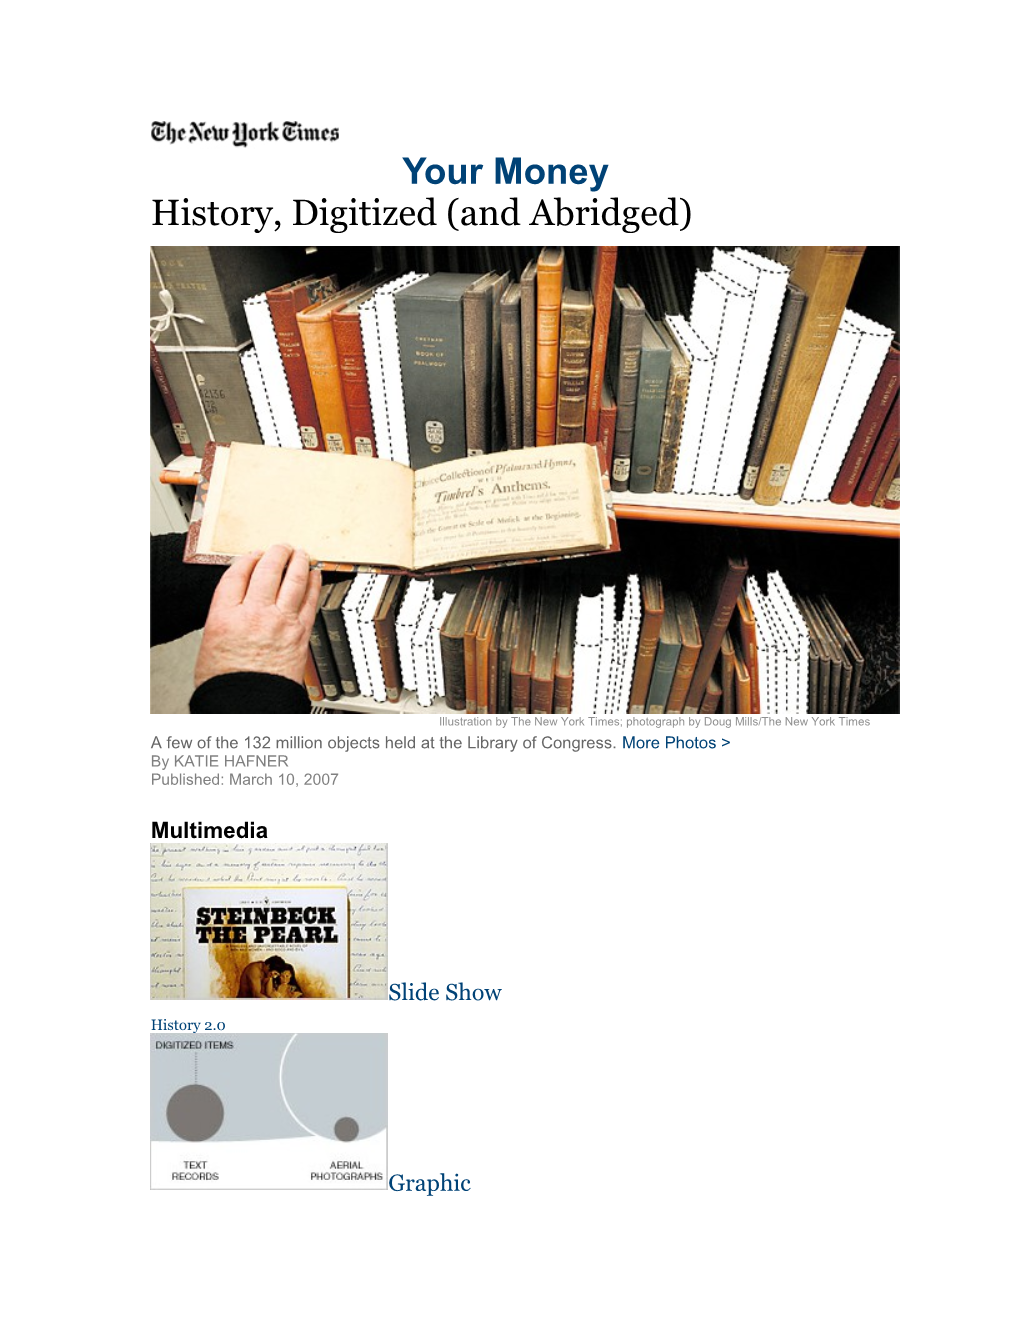 History, Digitized (And Abridged)